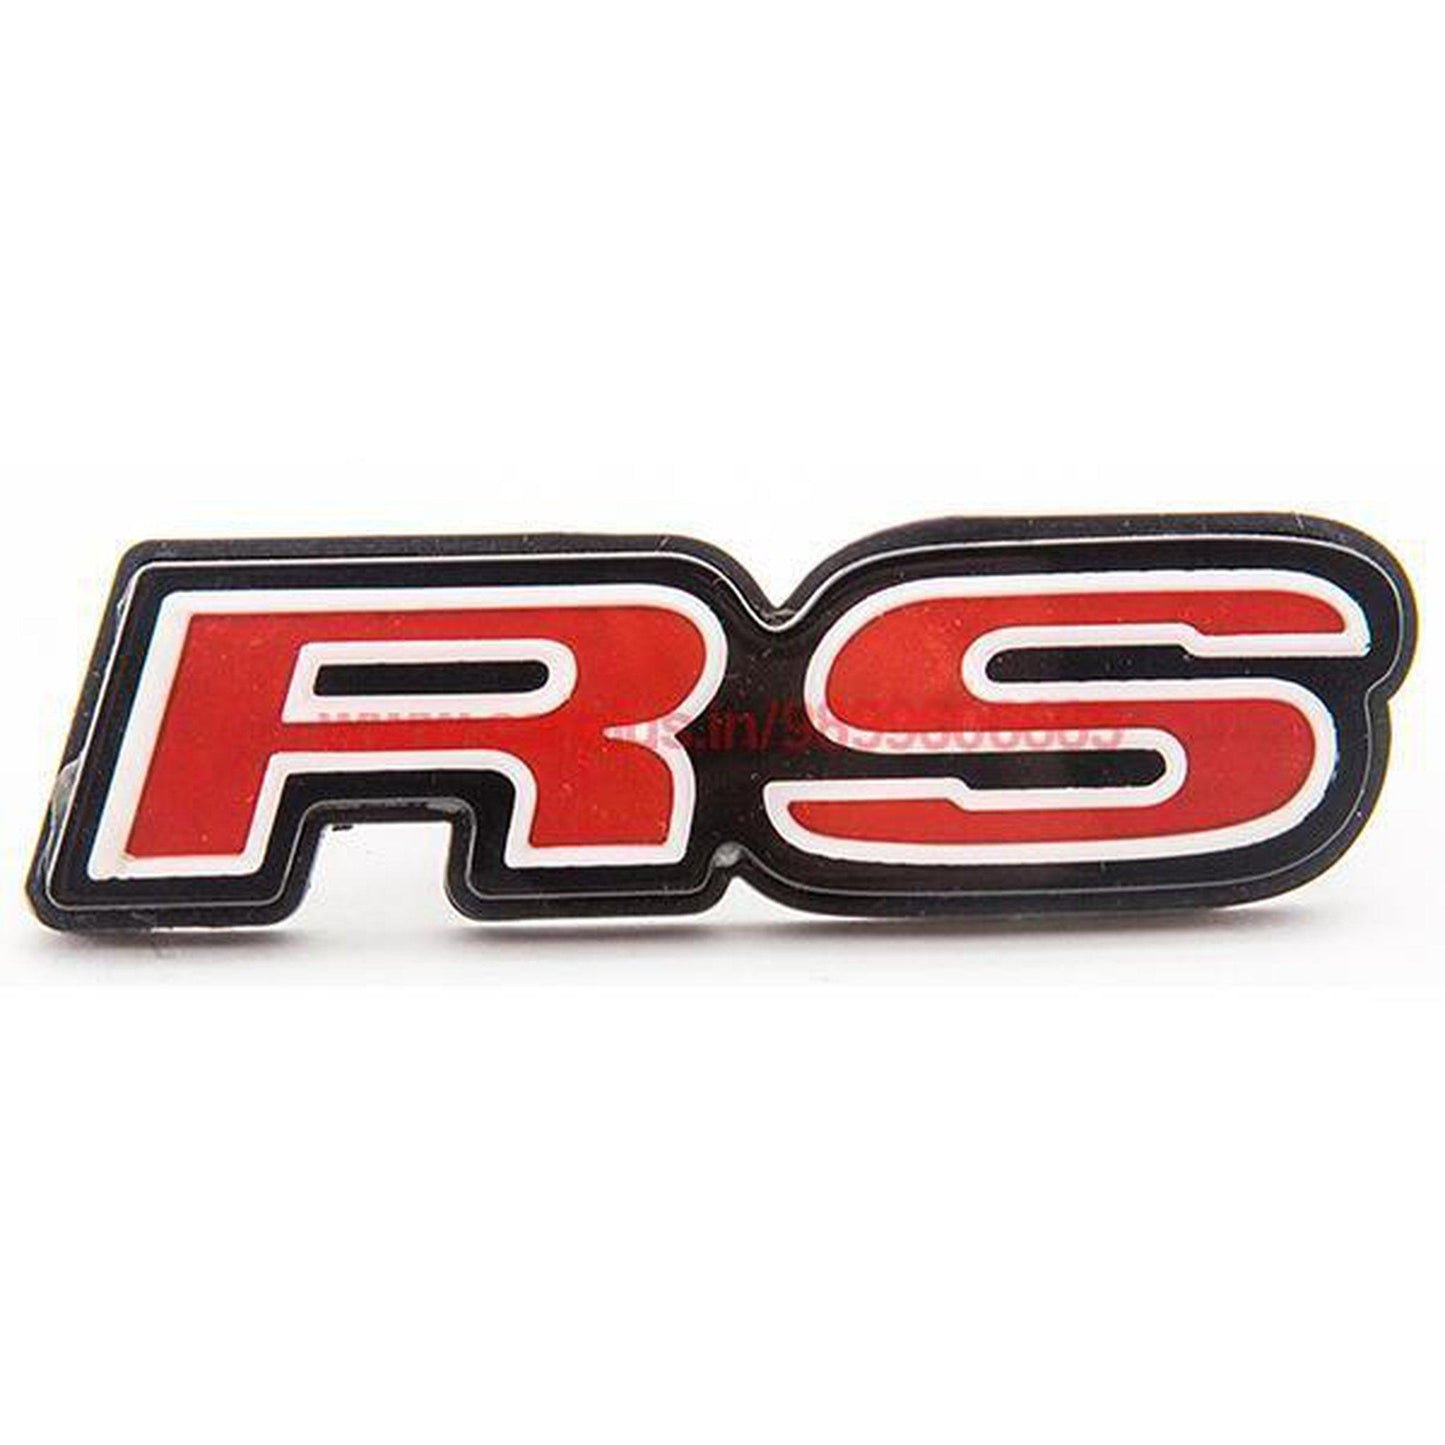 
                  
                    KMH RS Car Styling Auto Grille Badge Emblem Logo Light For Audi KMH-BADGES BADGES.
                  
                